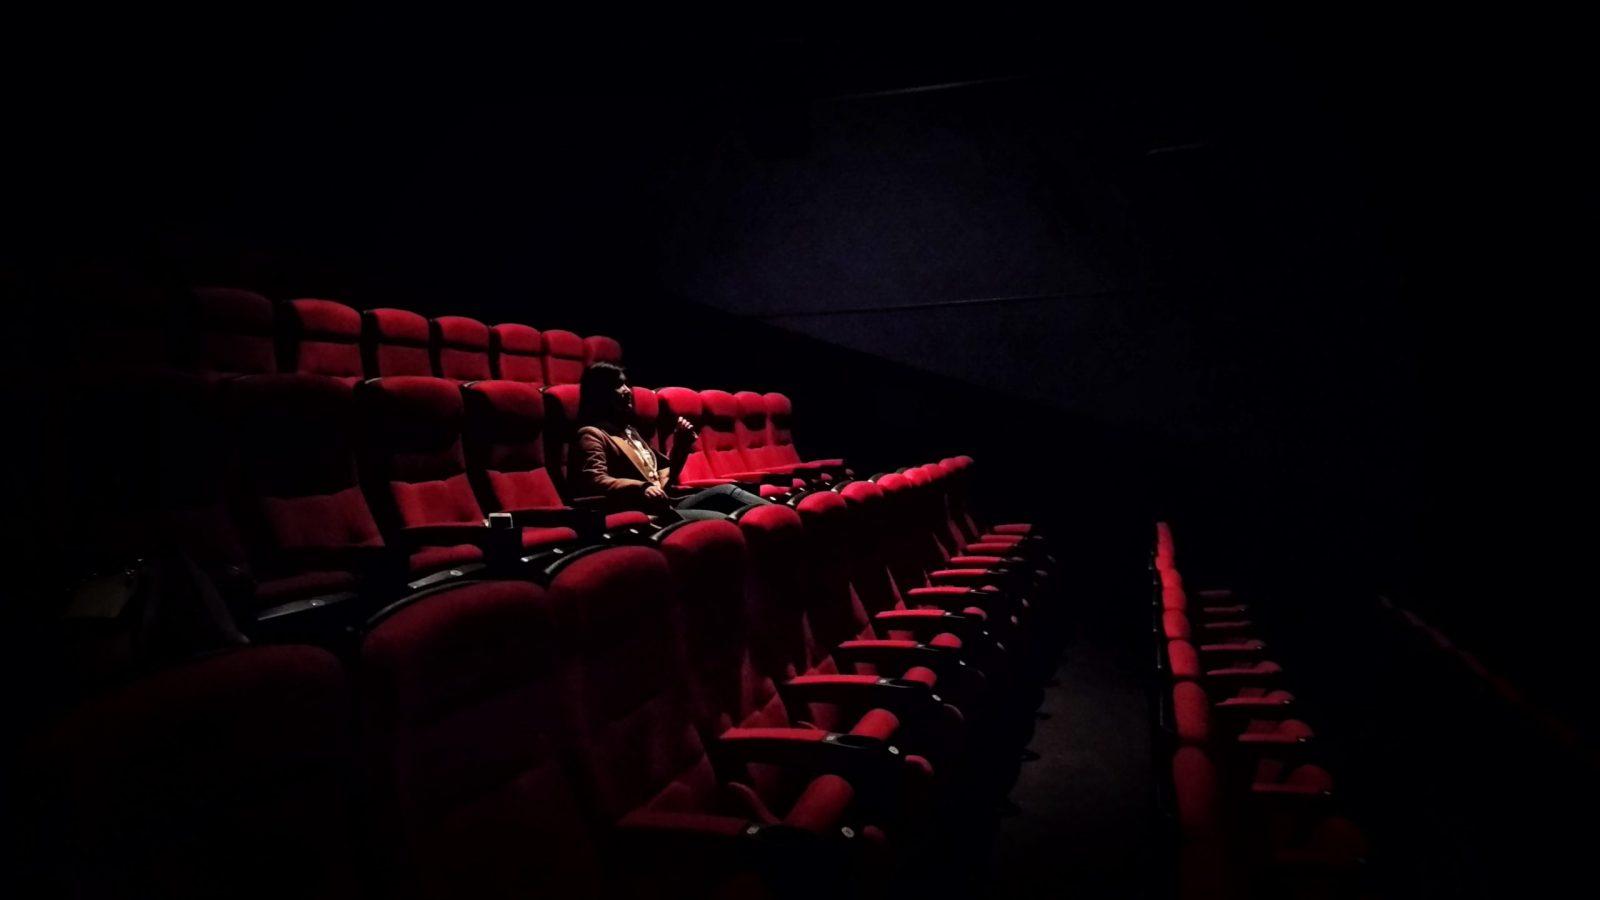 The Dark Days of Cinema